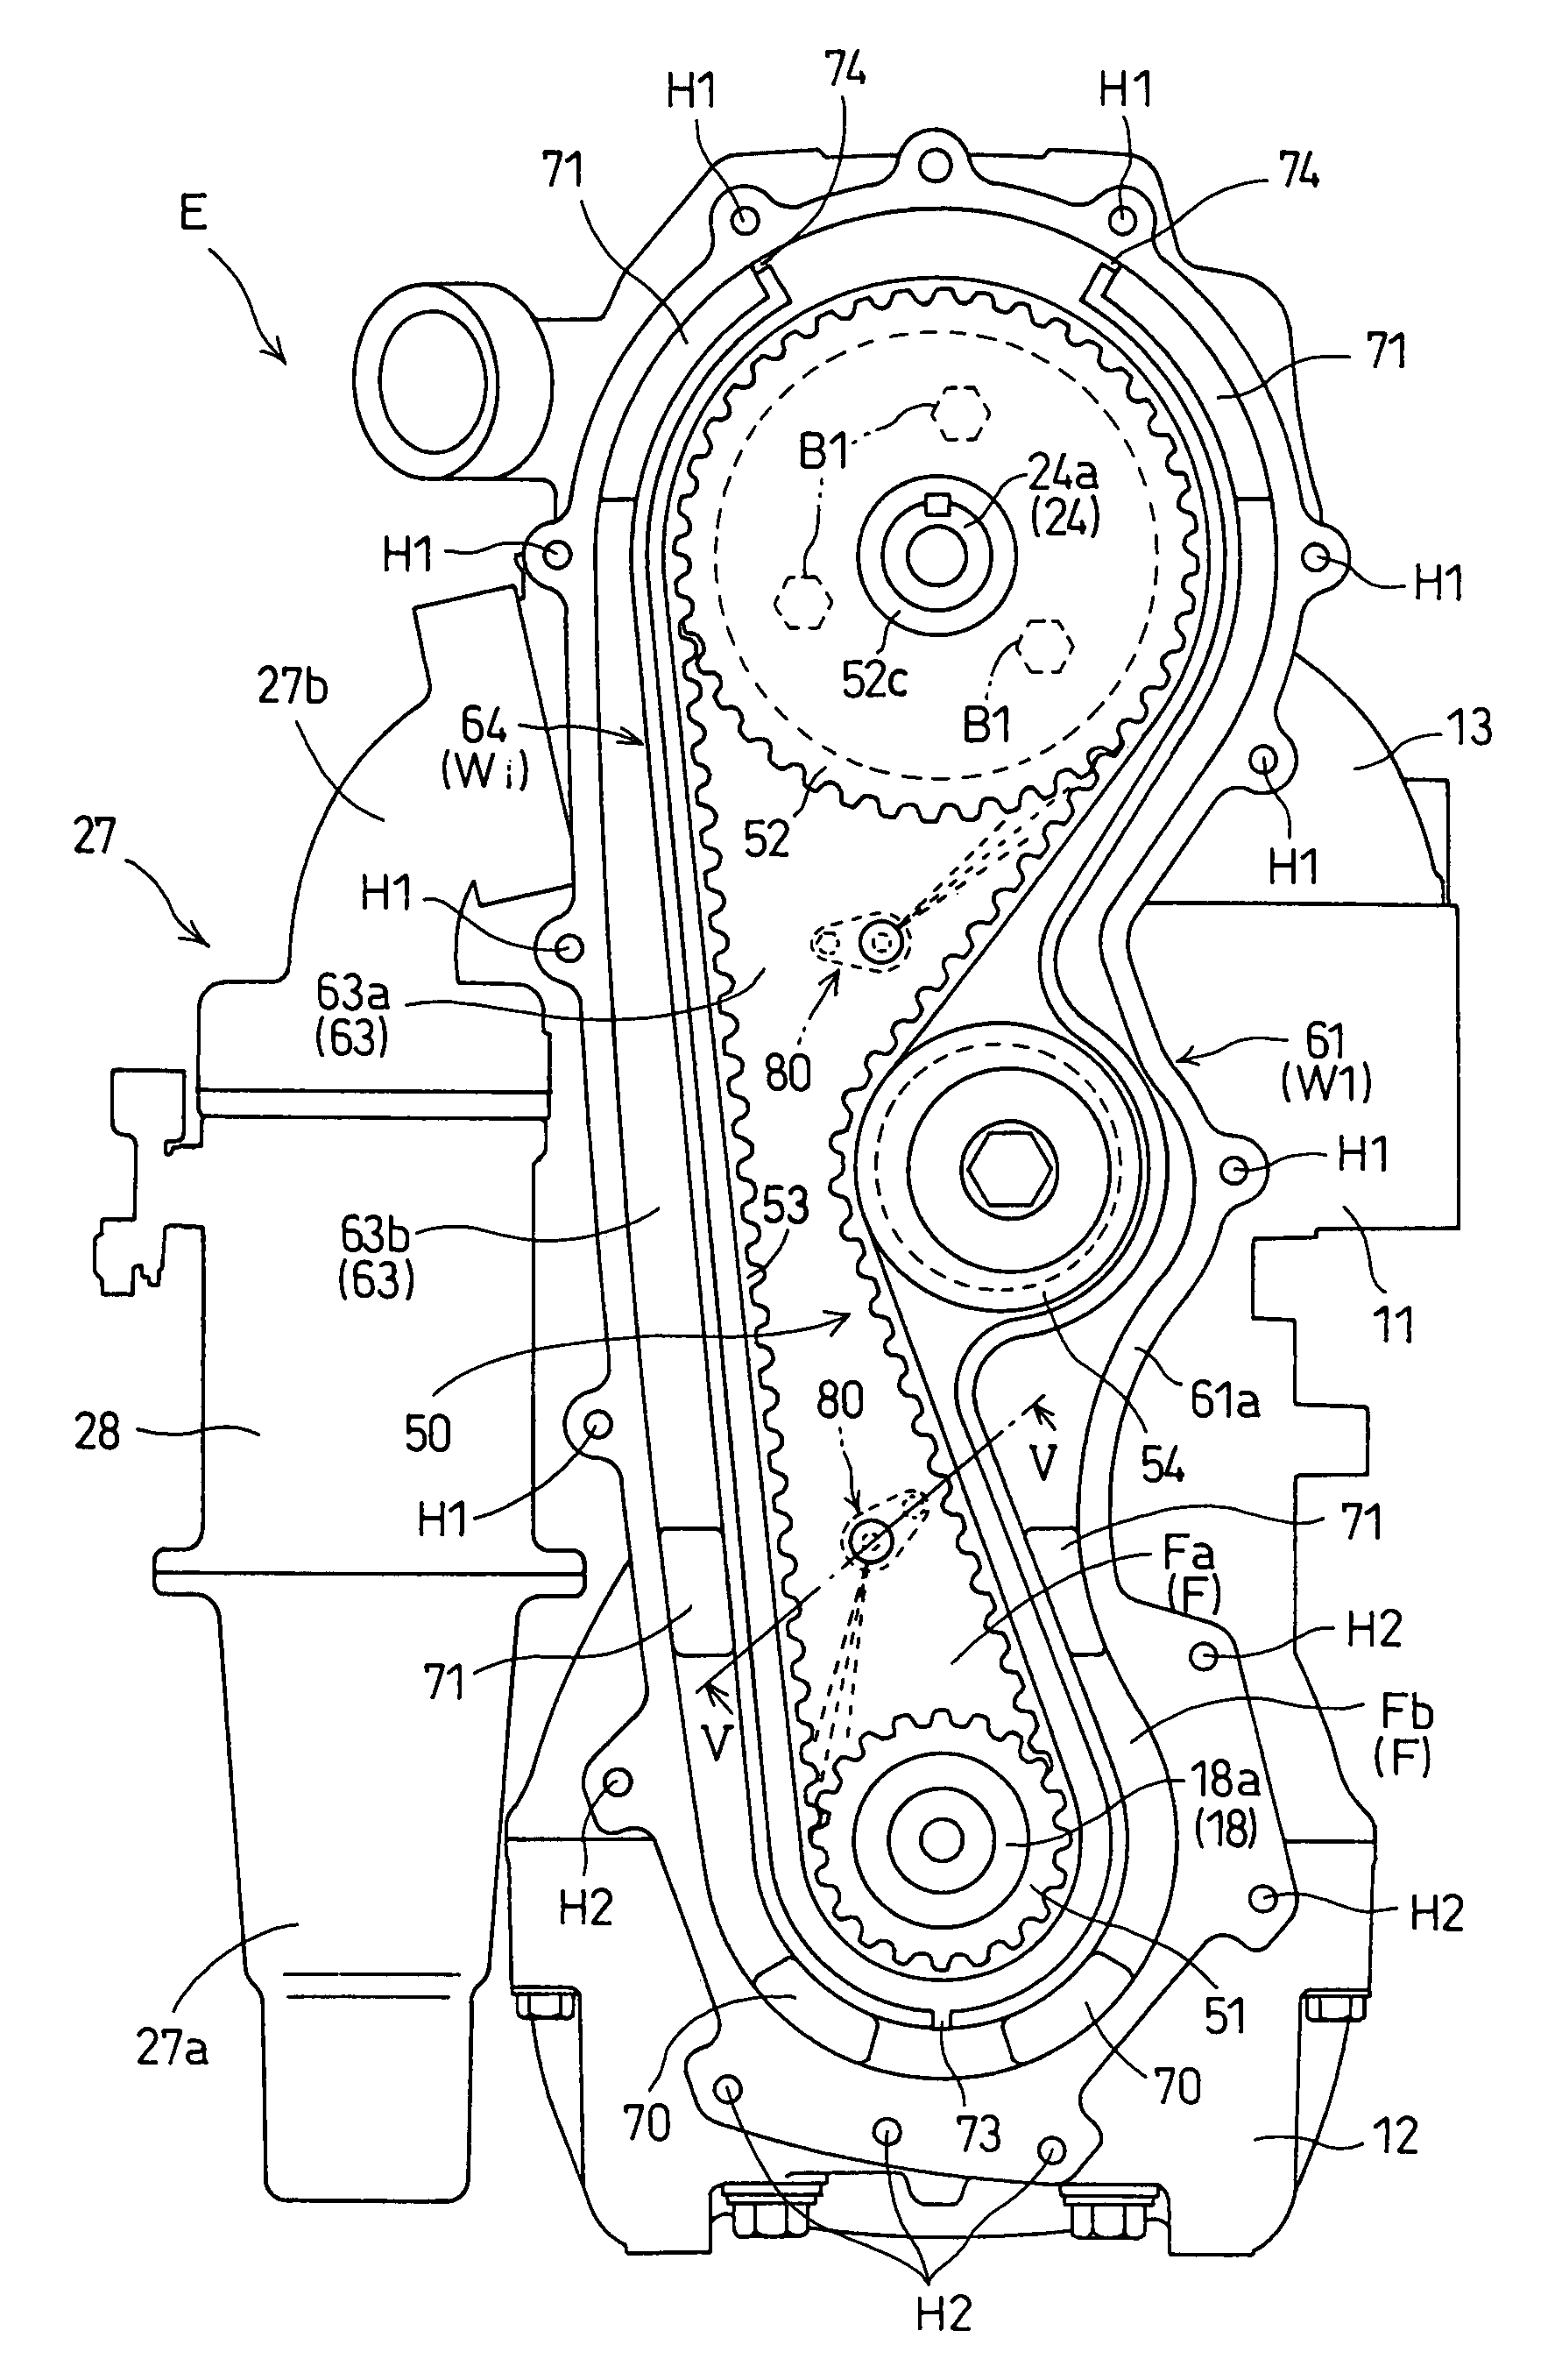 Vertical internal combustion engine provided with belt-drive transmission mechanism